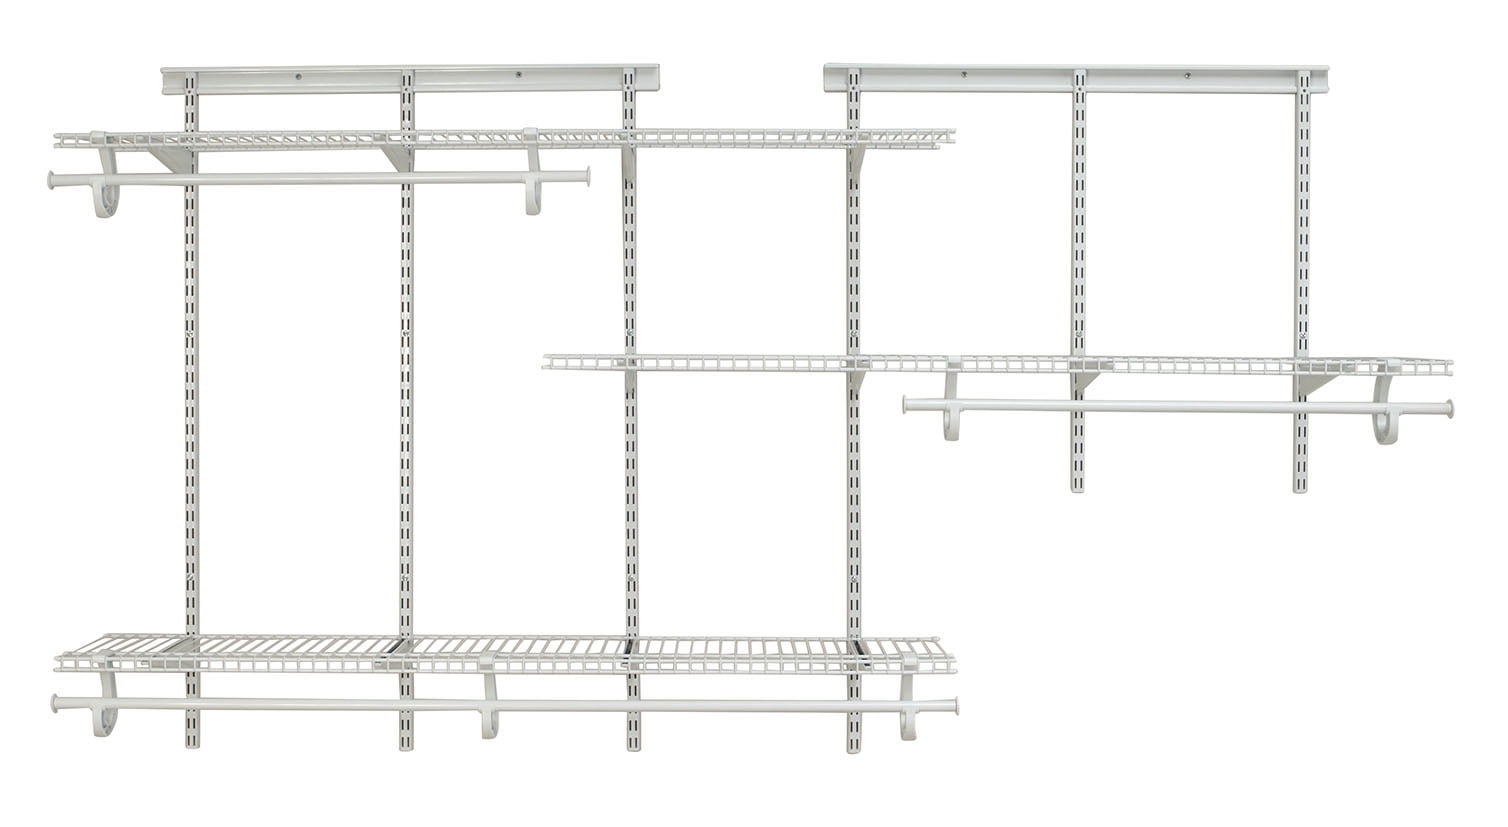 ClosetMaid ShelfTrack 5-ft to 8-ft x 13-in White Wire Closet Kit